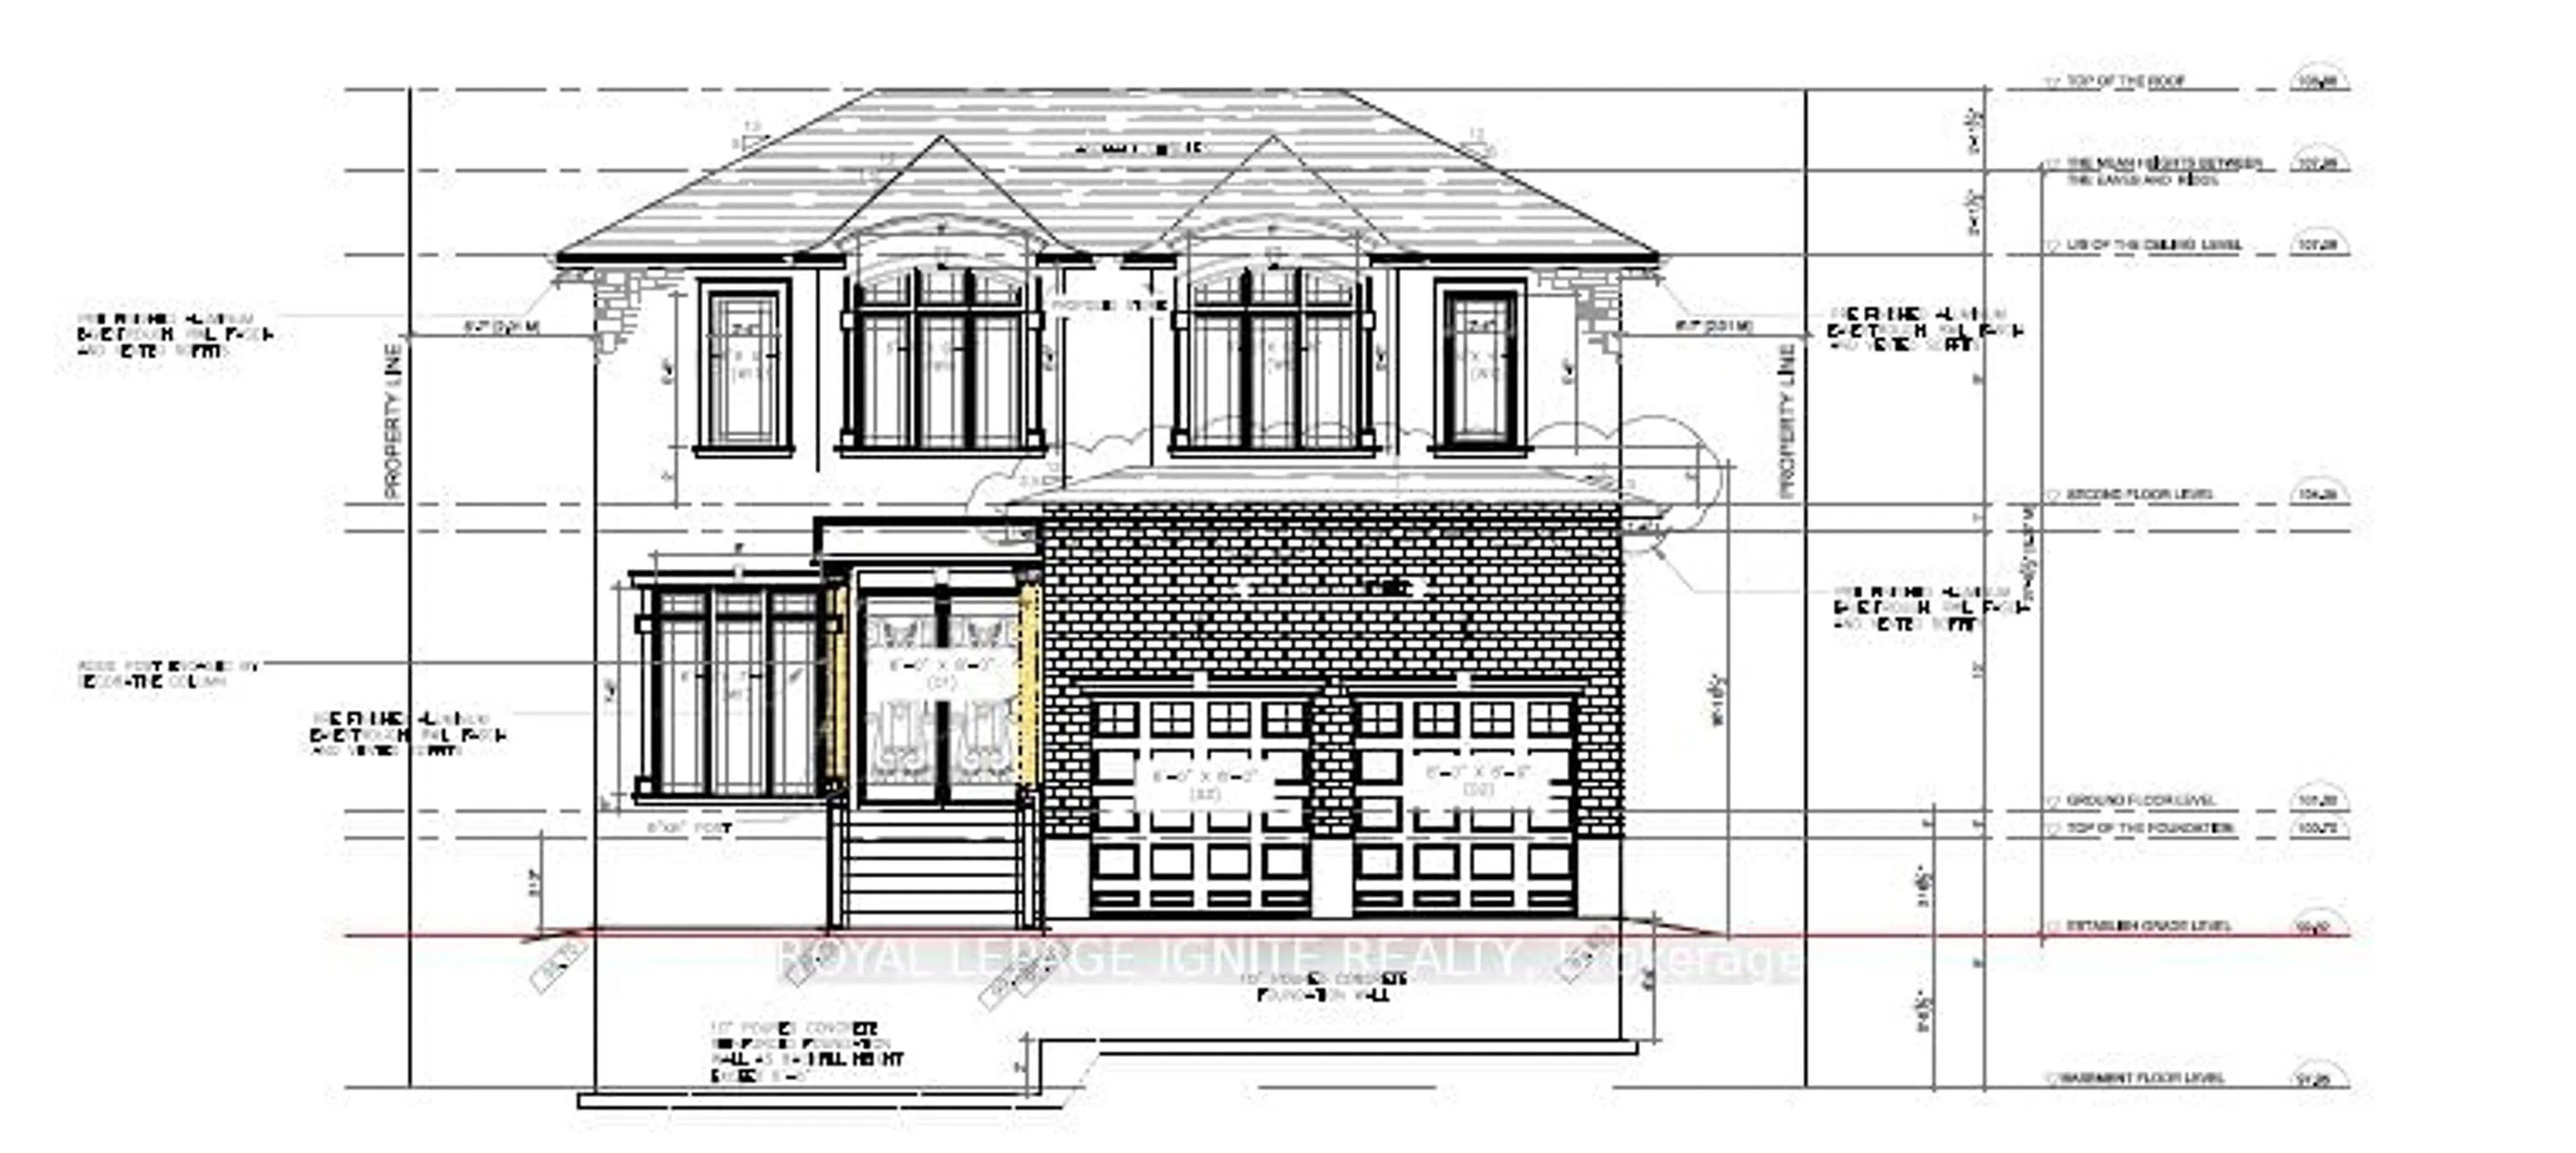 Floor plan for 1010 Byron St, Whitby Ontario L1N 4P3